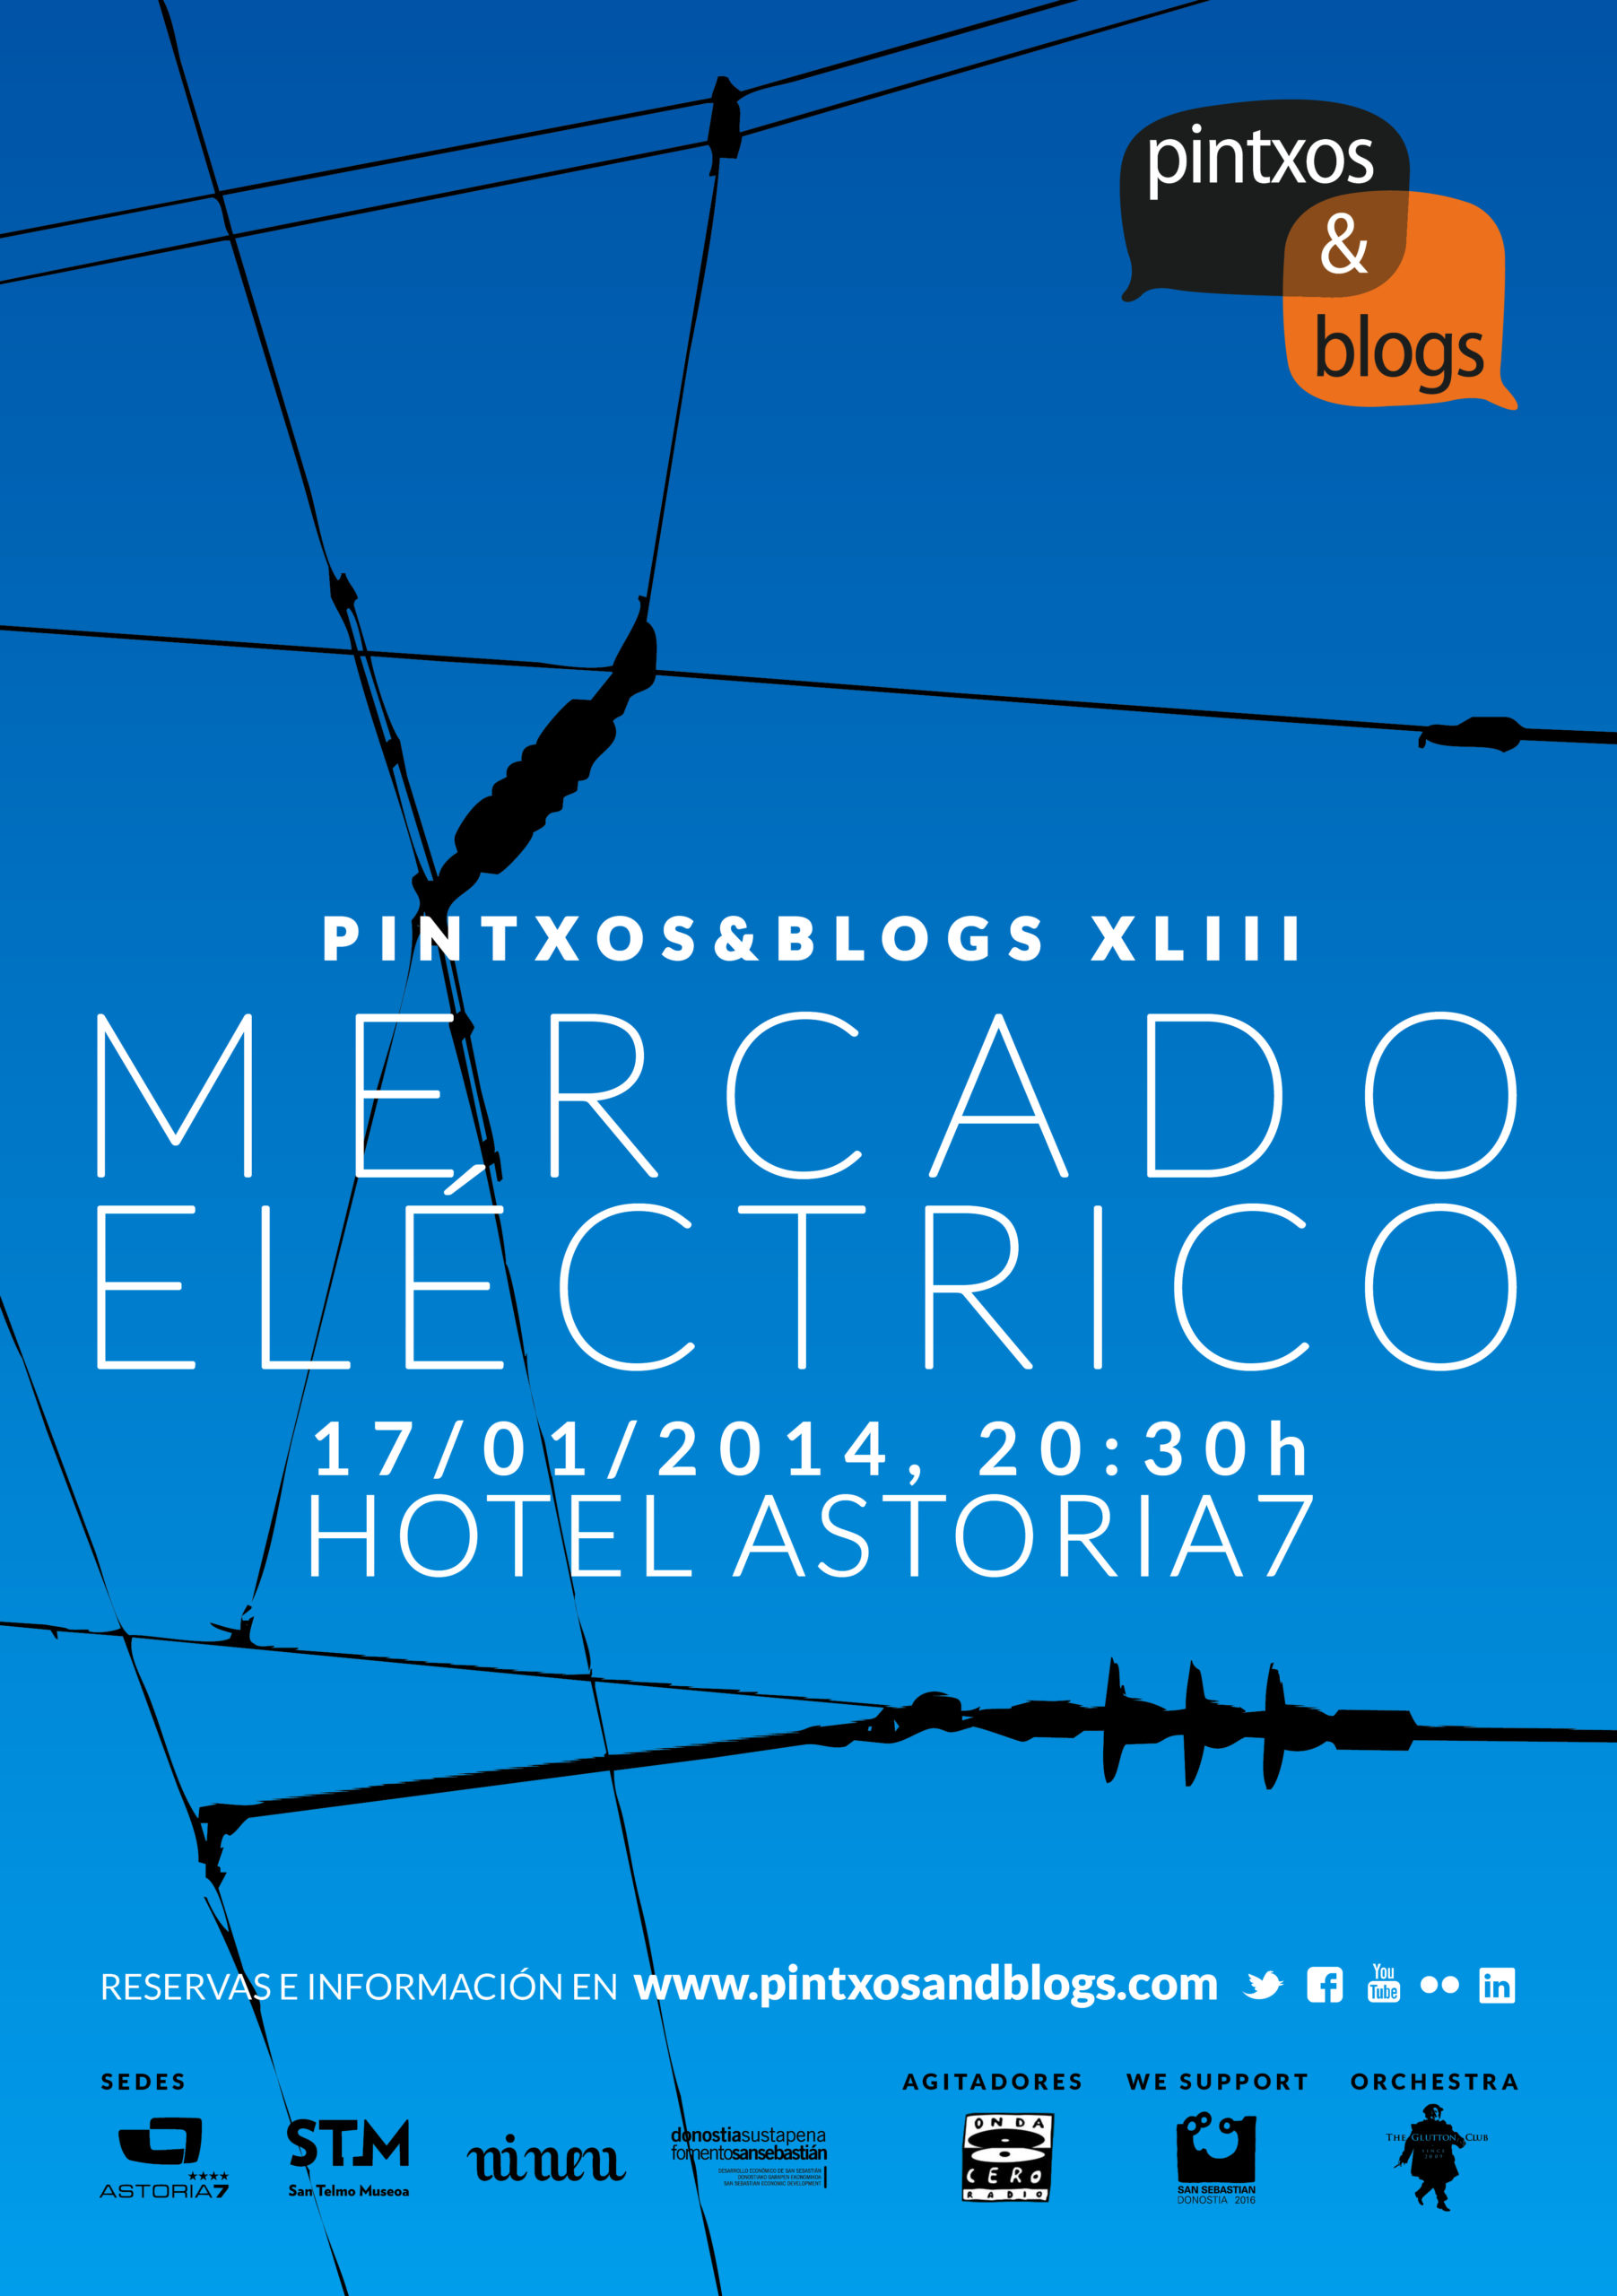 Pintxos&Blogs XLIII. Mercado eléctrico. 2014.01.17, Hotel Astoria